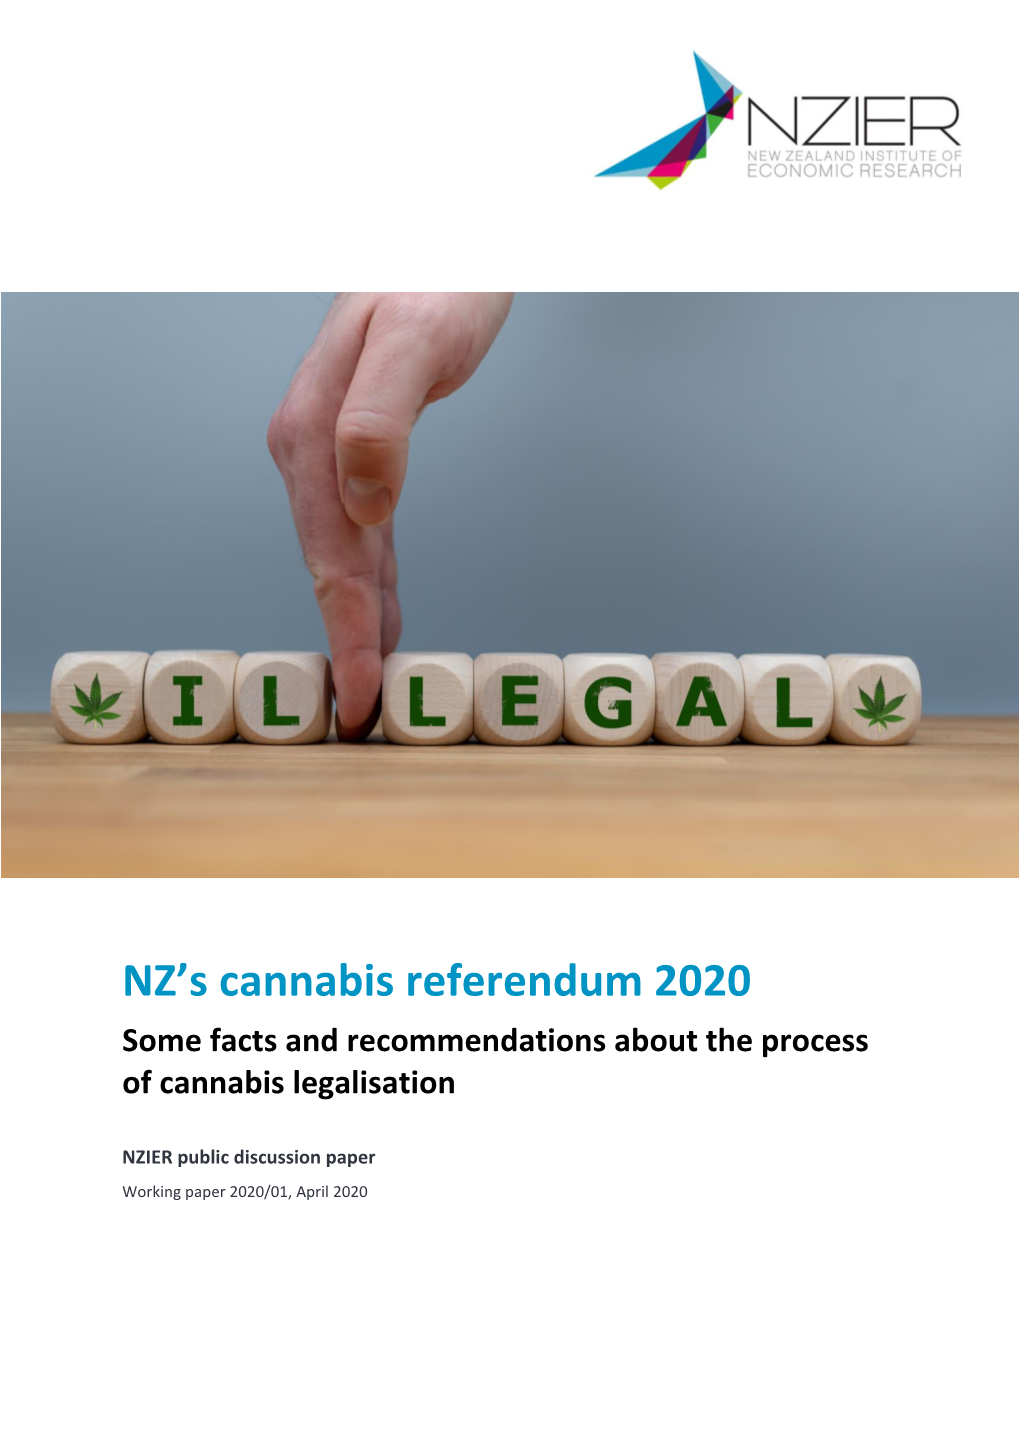 NZ's Cannabis Referendum 2020